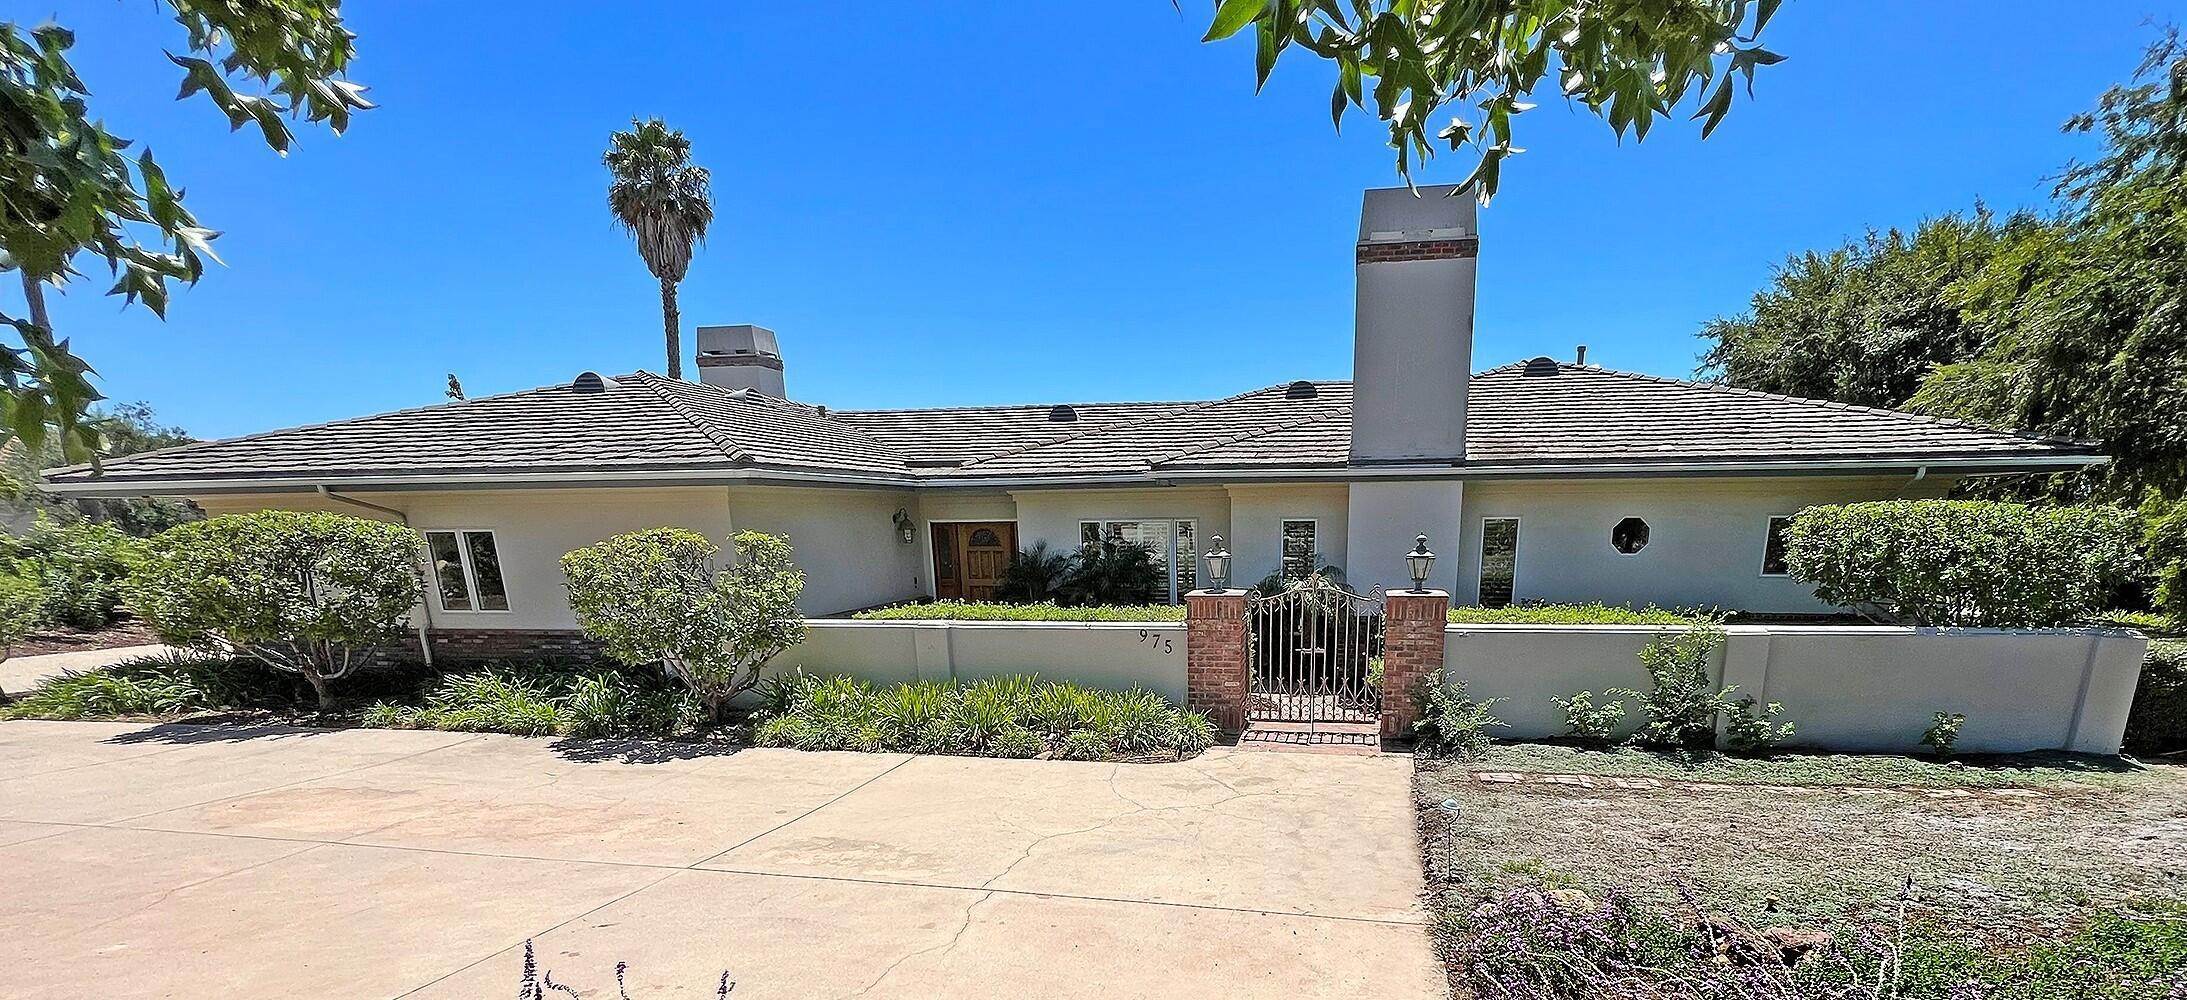 Estate for Sale at 975 Paseo Los Santos Santa Barbara, California 93111 United States